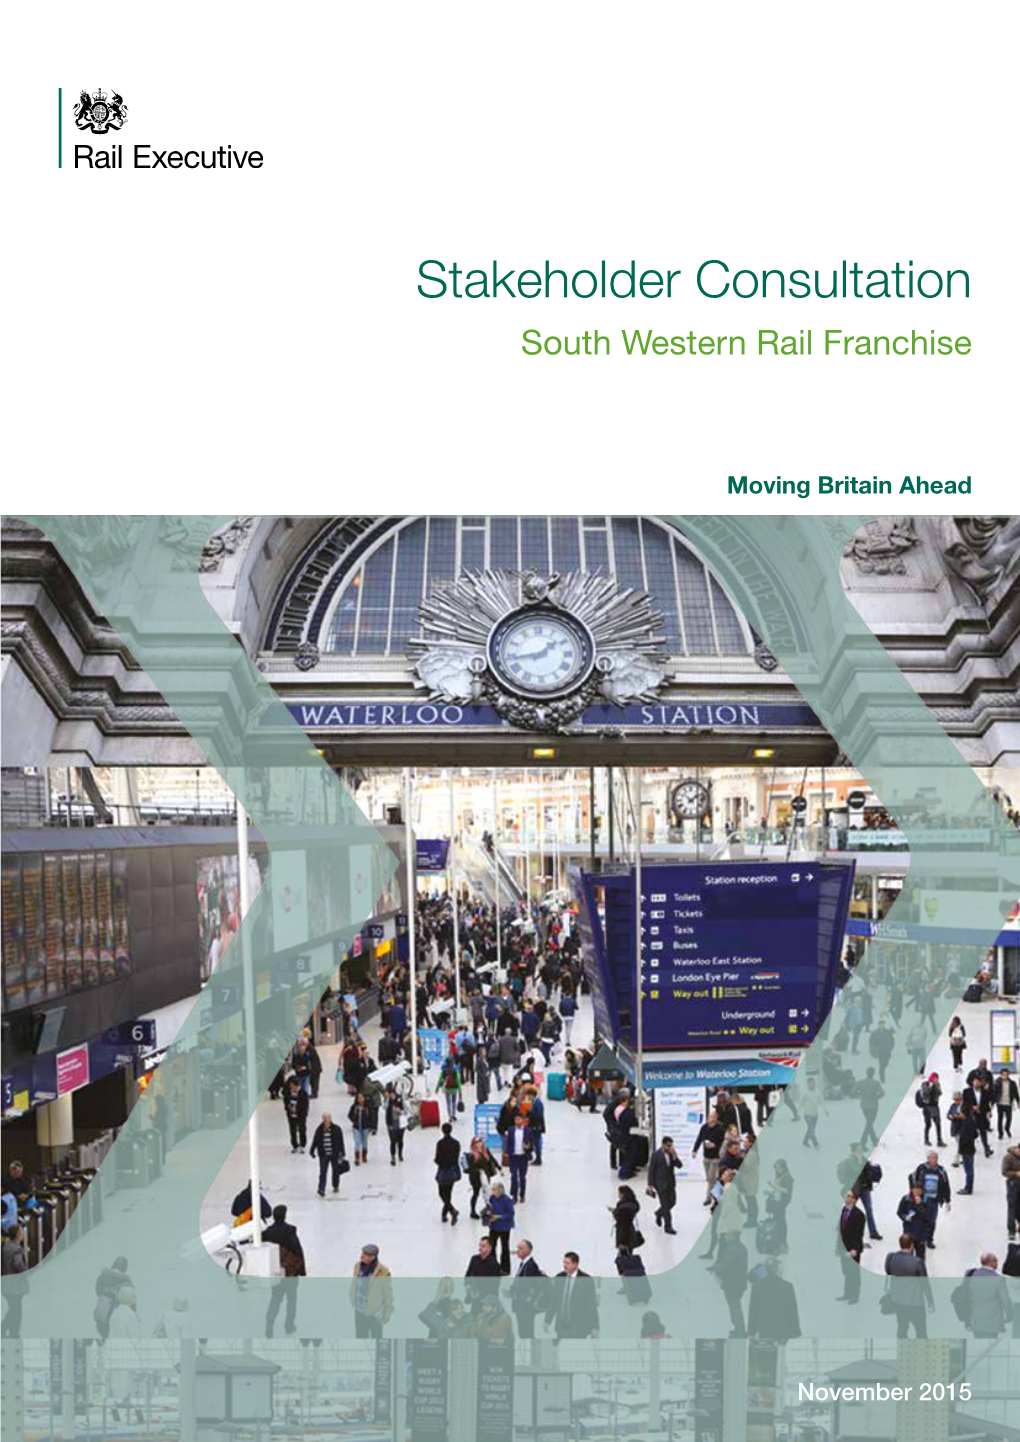 Stakeholder Consultation South Western Rail Franchise